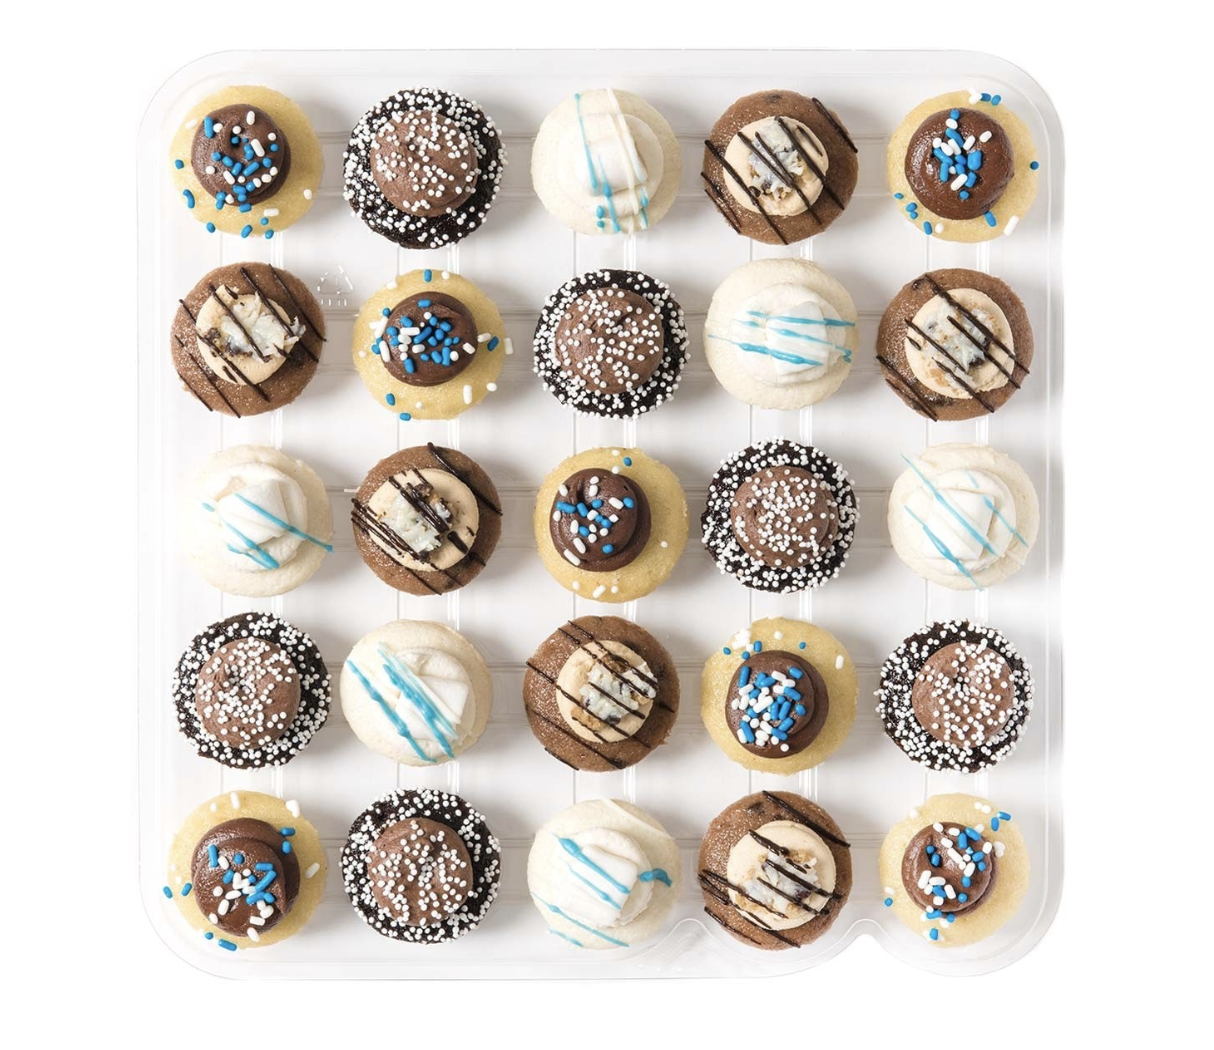 Hanukkah Hostess Food Gifts: Baked By Melissa FEstival of Bites mini cupcakes